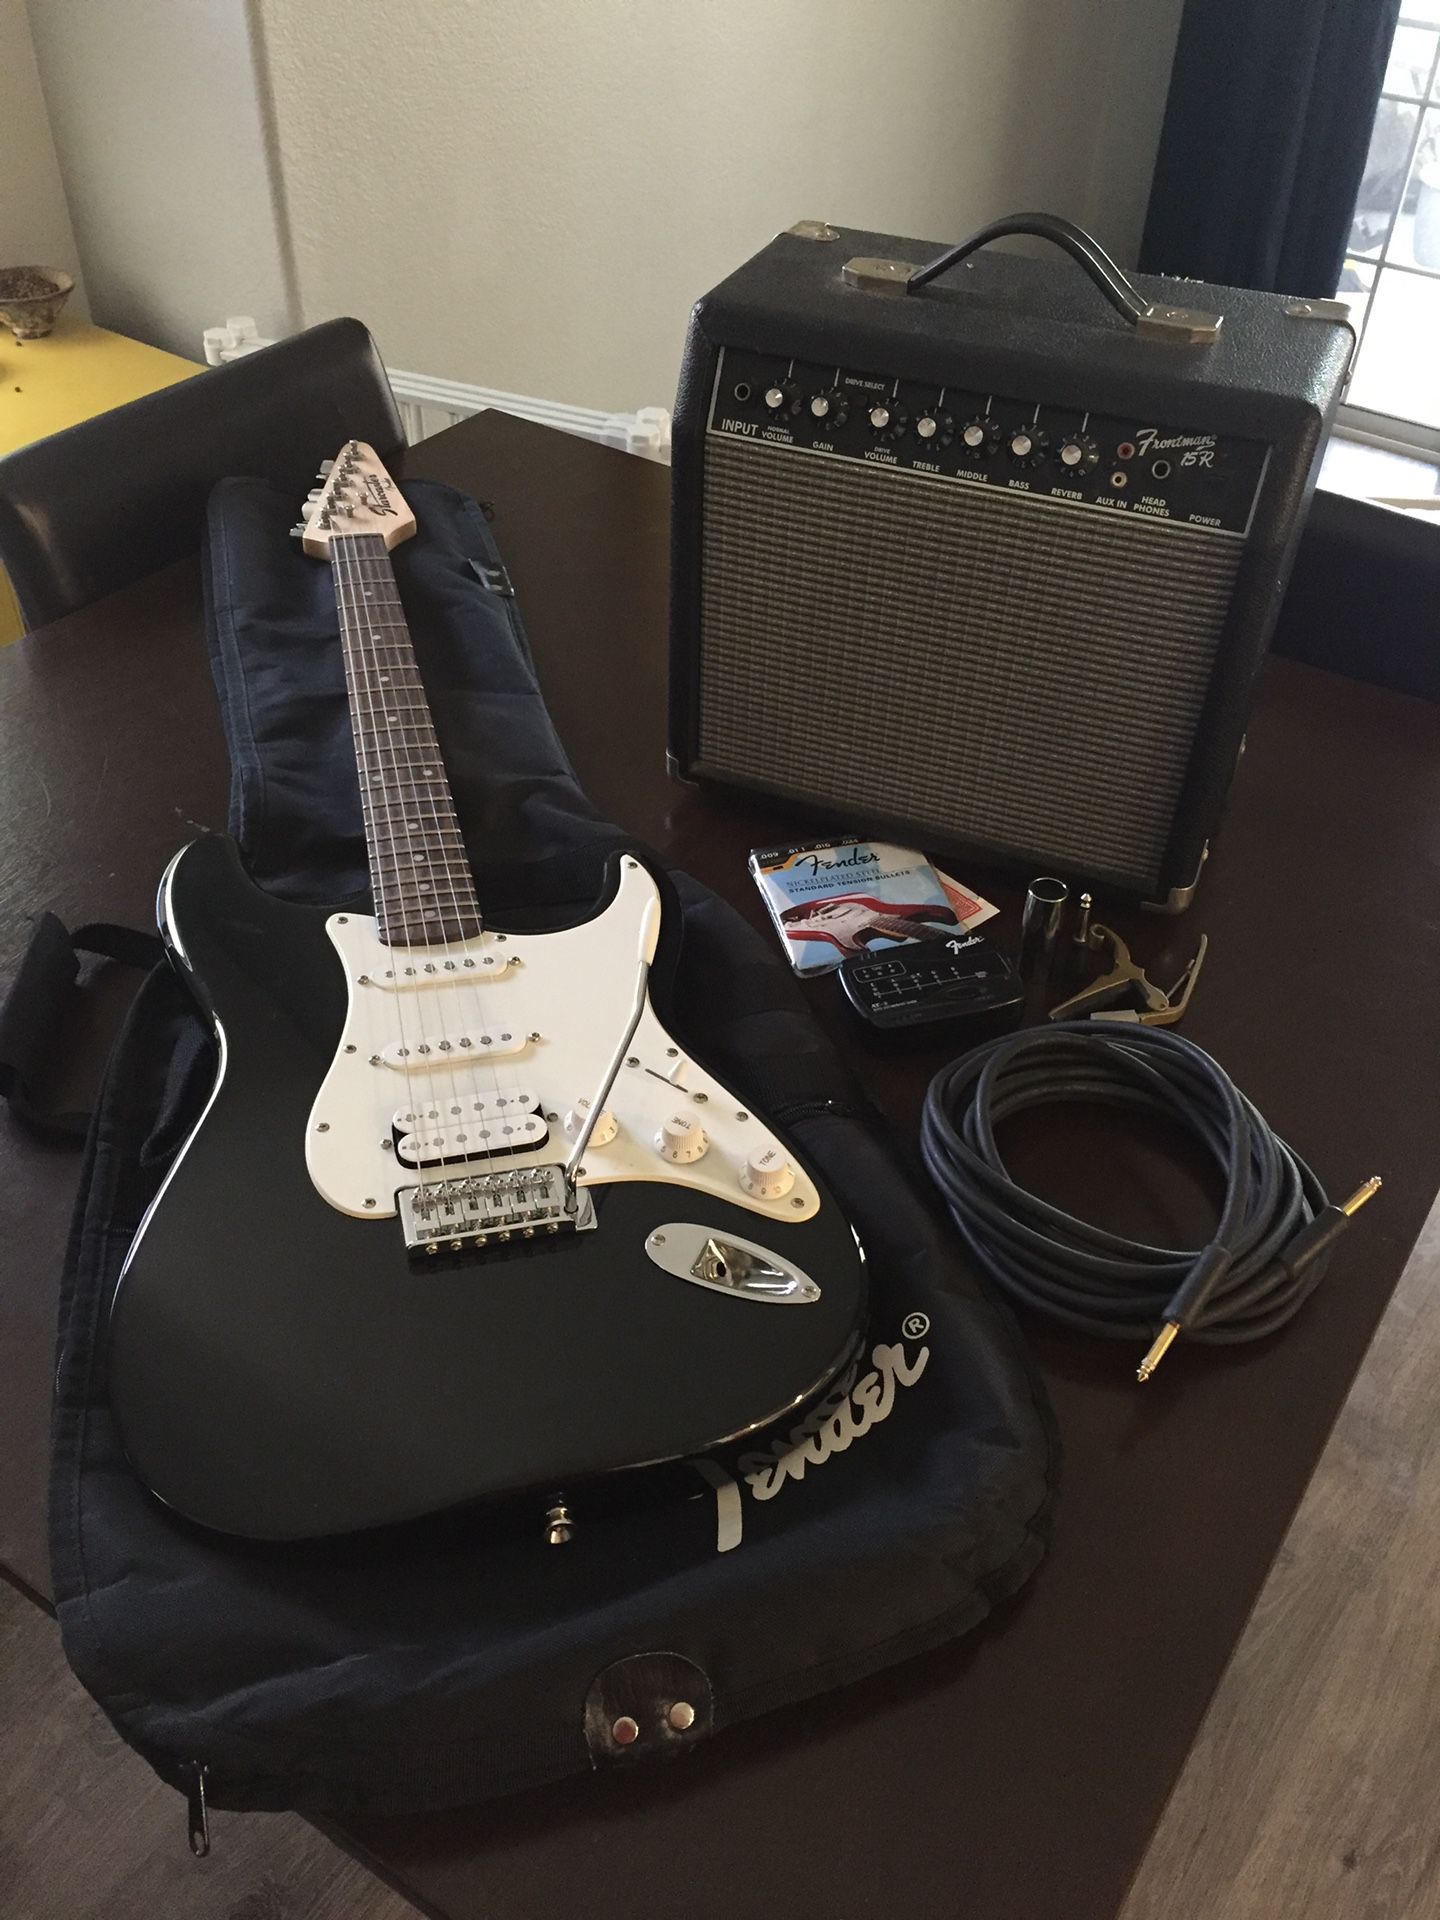 Fender Starcaster Guitar and Amp